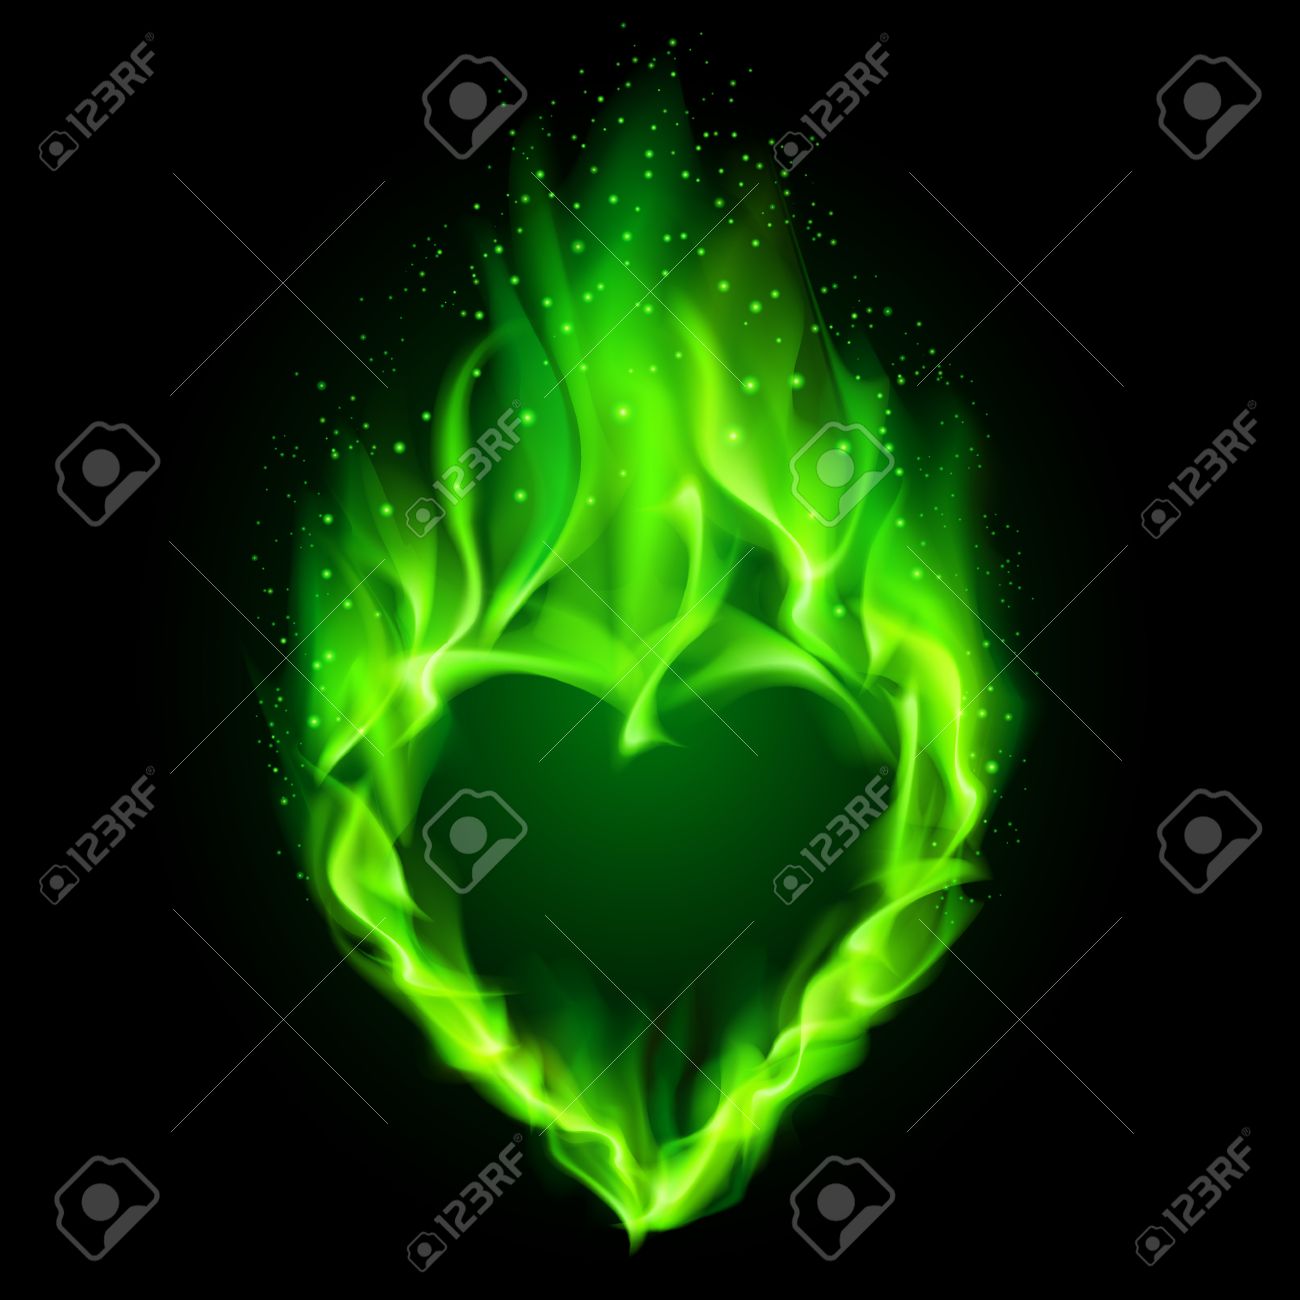 Blazing Green Heart Illustration On Black Background Royalty